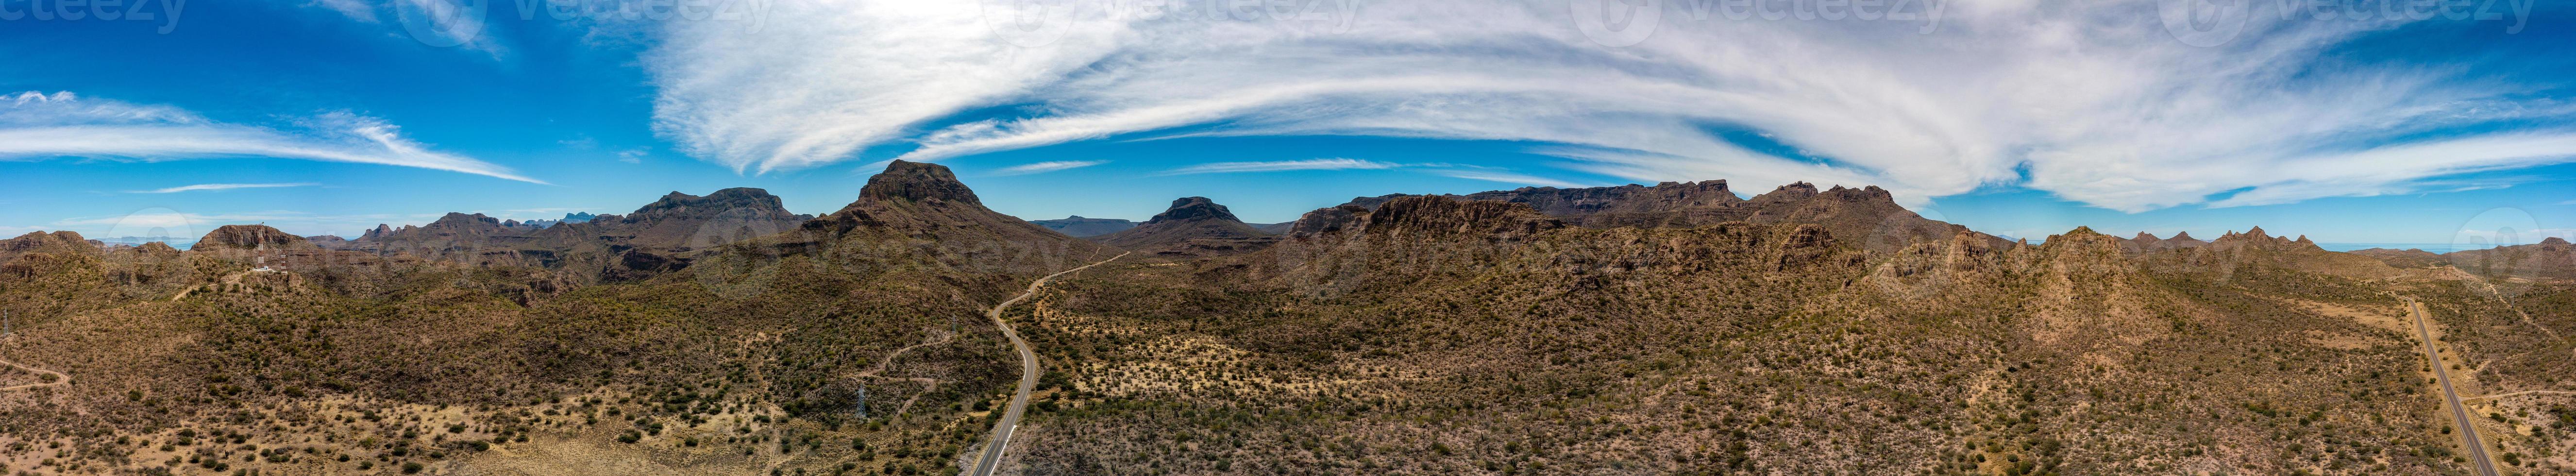 loreto costa panorama aéreo baja califórnia deserto colorido paisagem vista foto